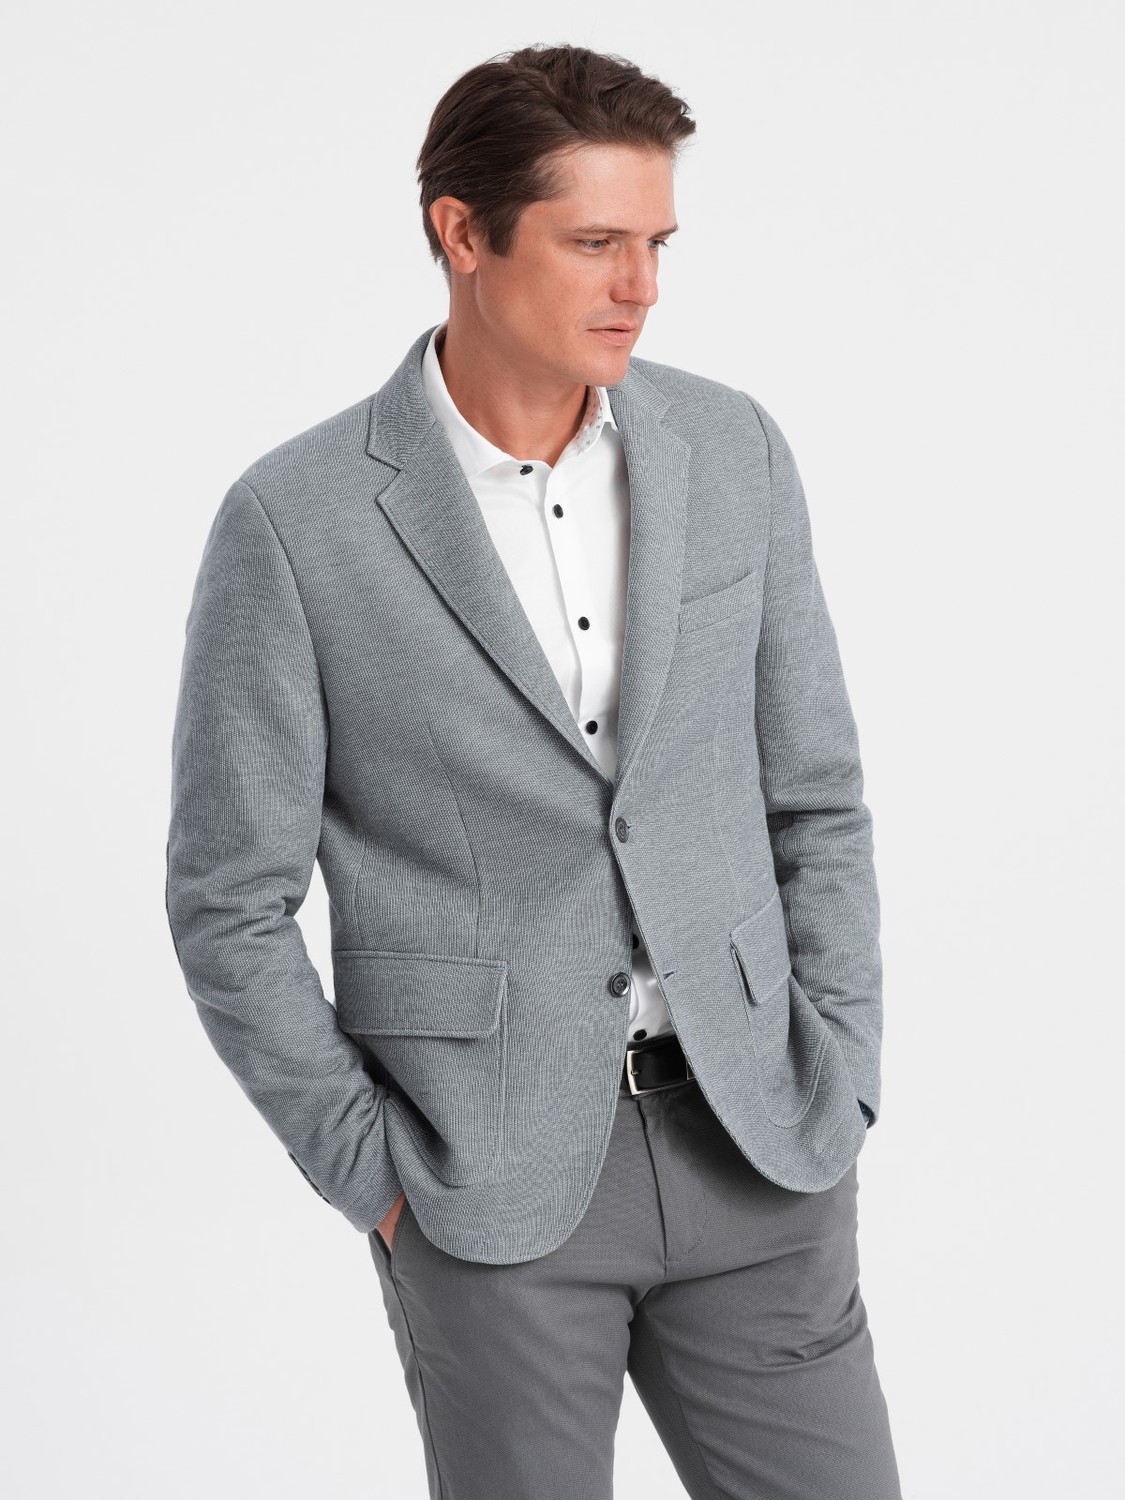 Men's jacket with elbow patches - light grey V1 OM-BLZB V1 OM-BLZB - 0108